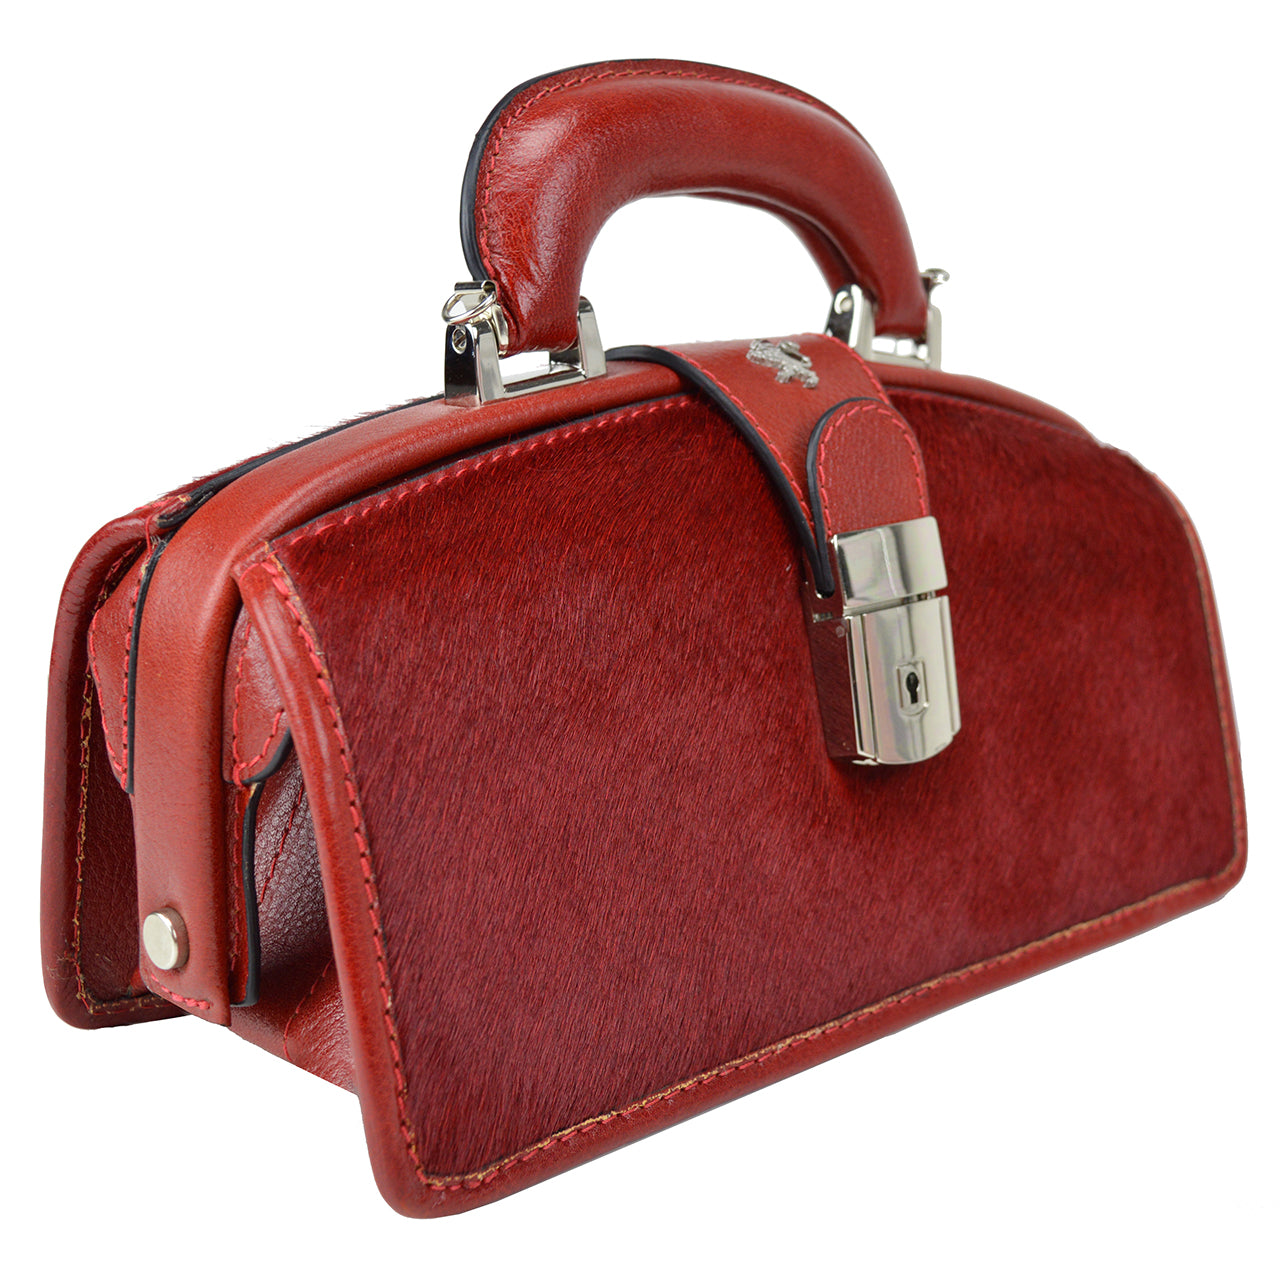 Pratesi Lady Brunelleschi Cavallino Handbag in real leather